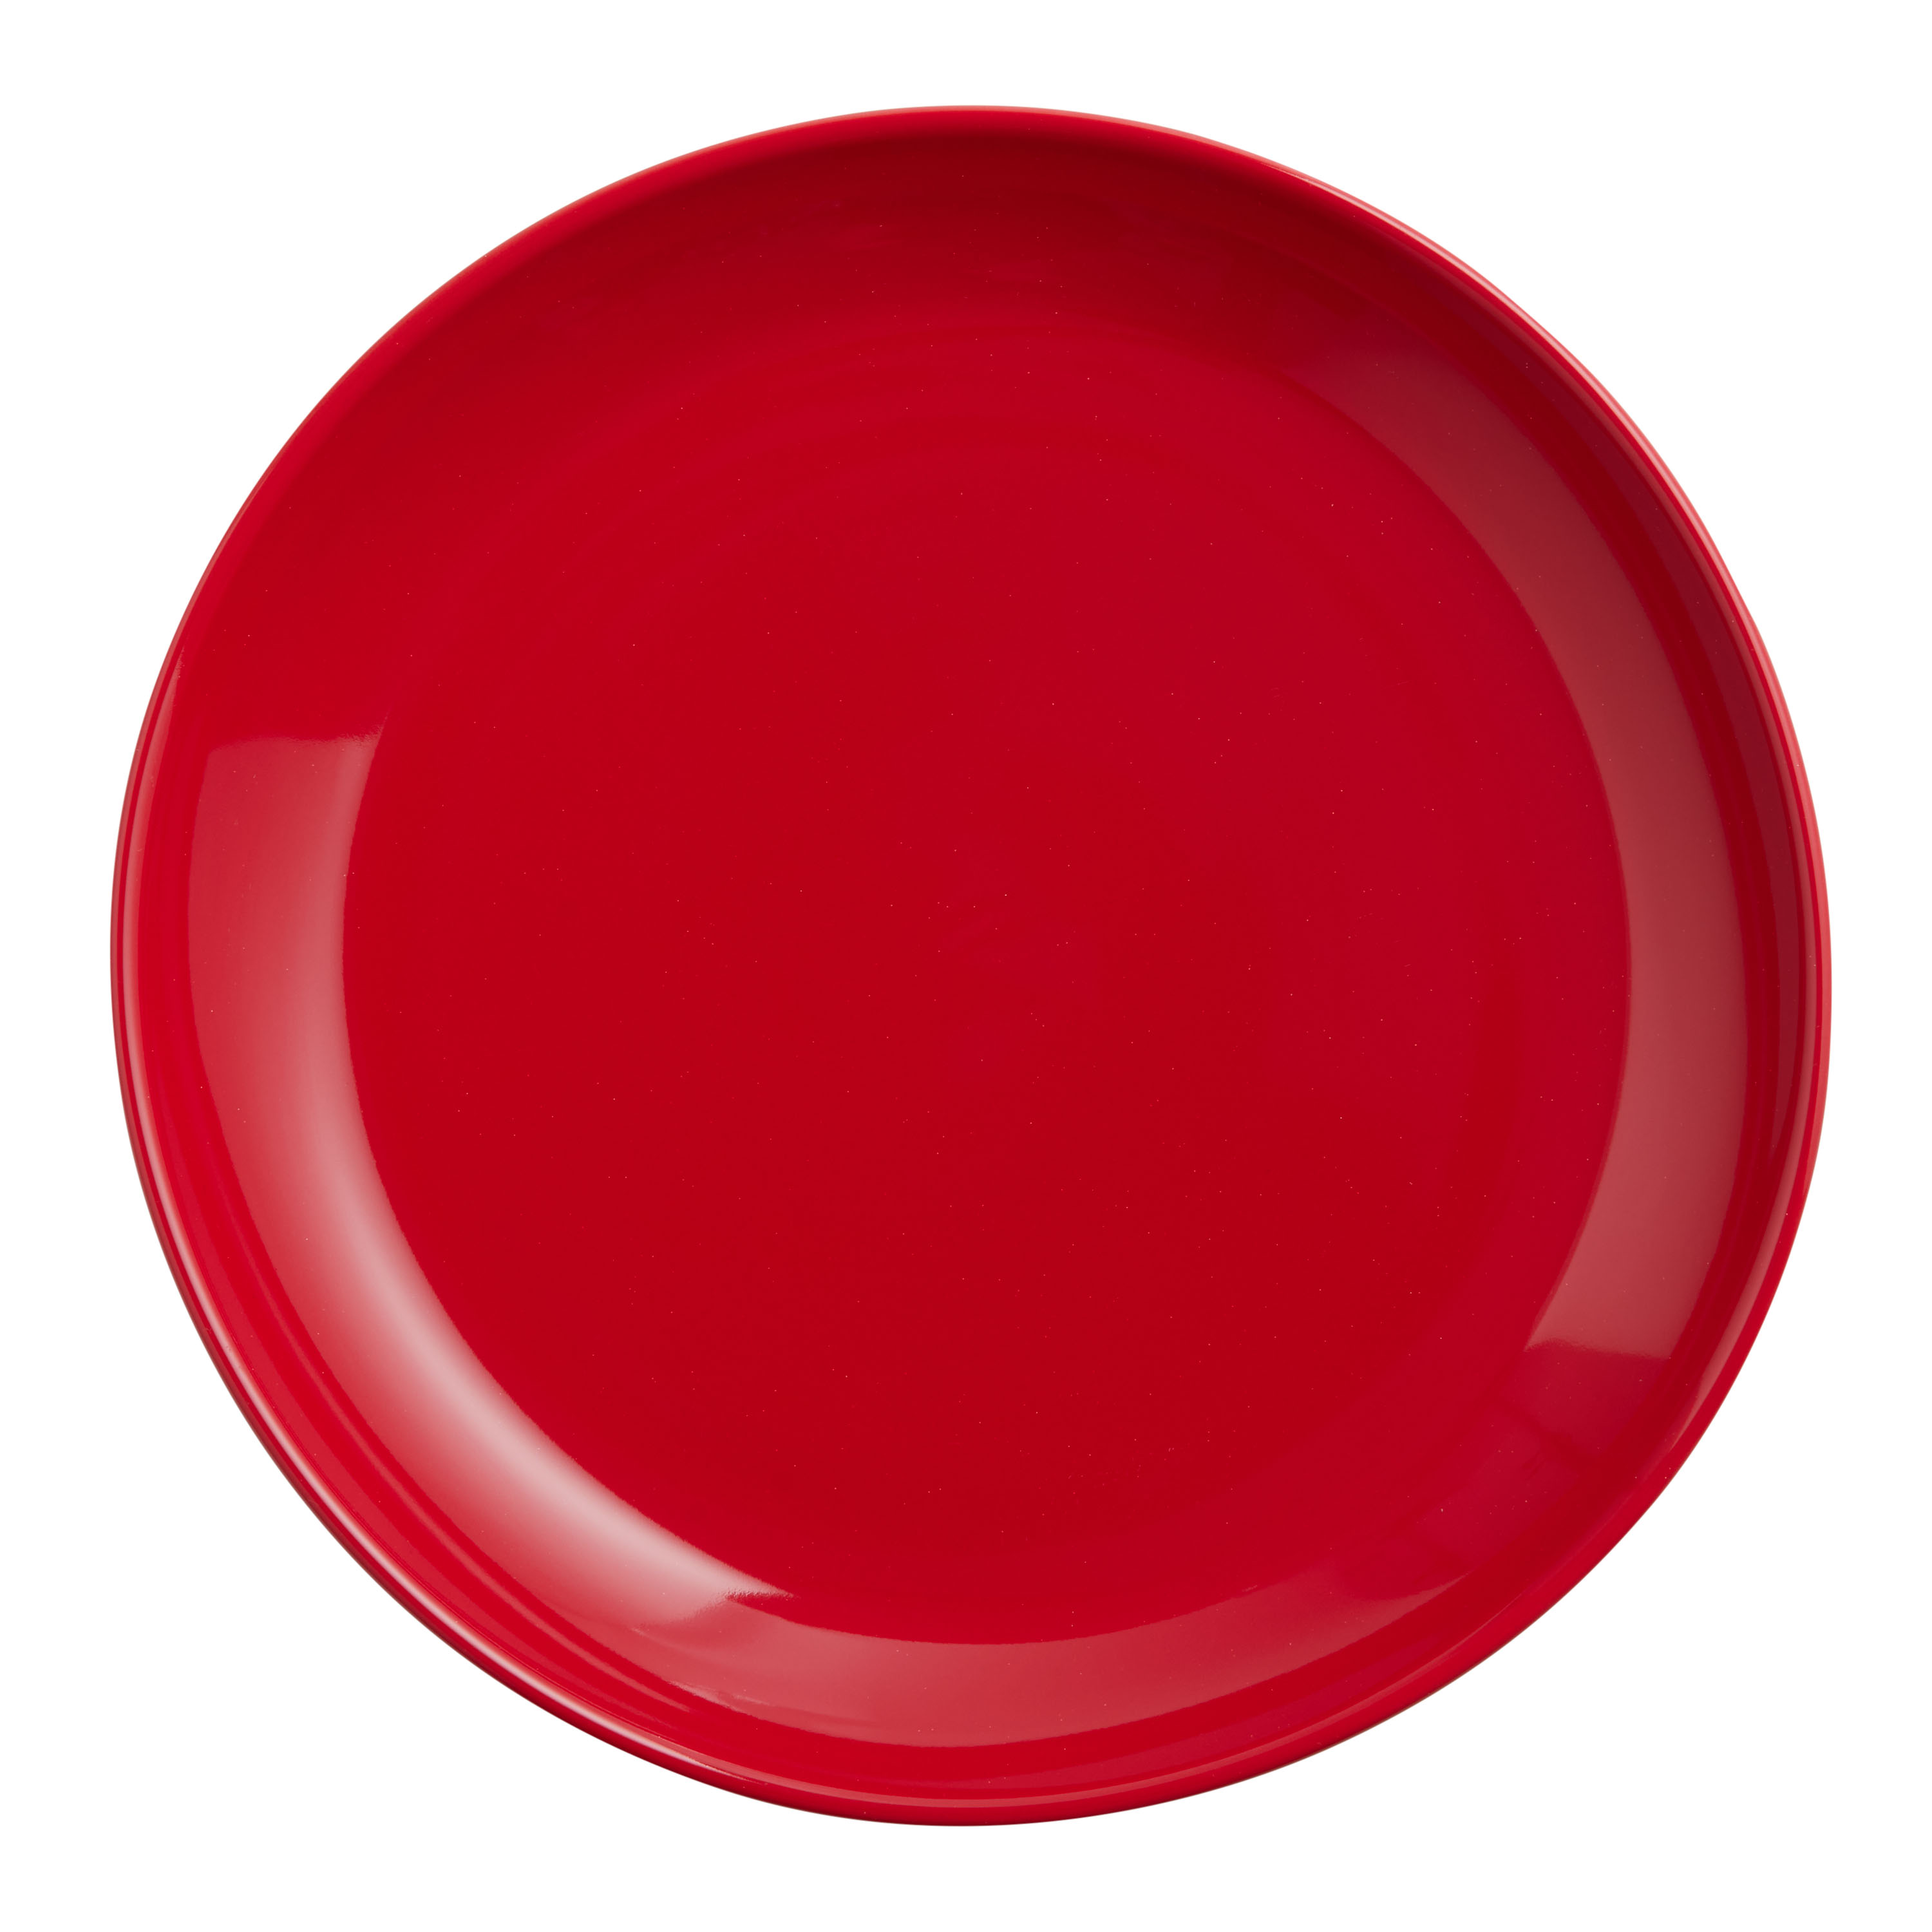 NEW~10 Piece Red Sushi Plate Set ~ World Market Asian Cherry Blossom Ceramic